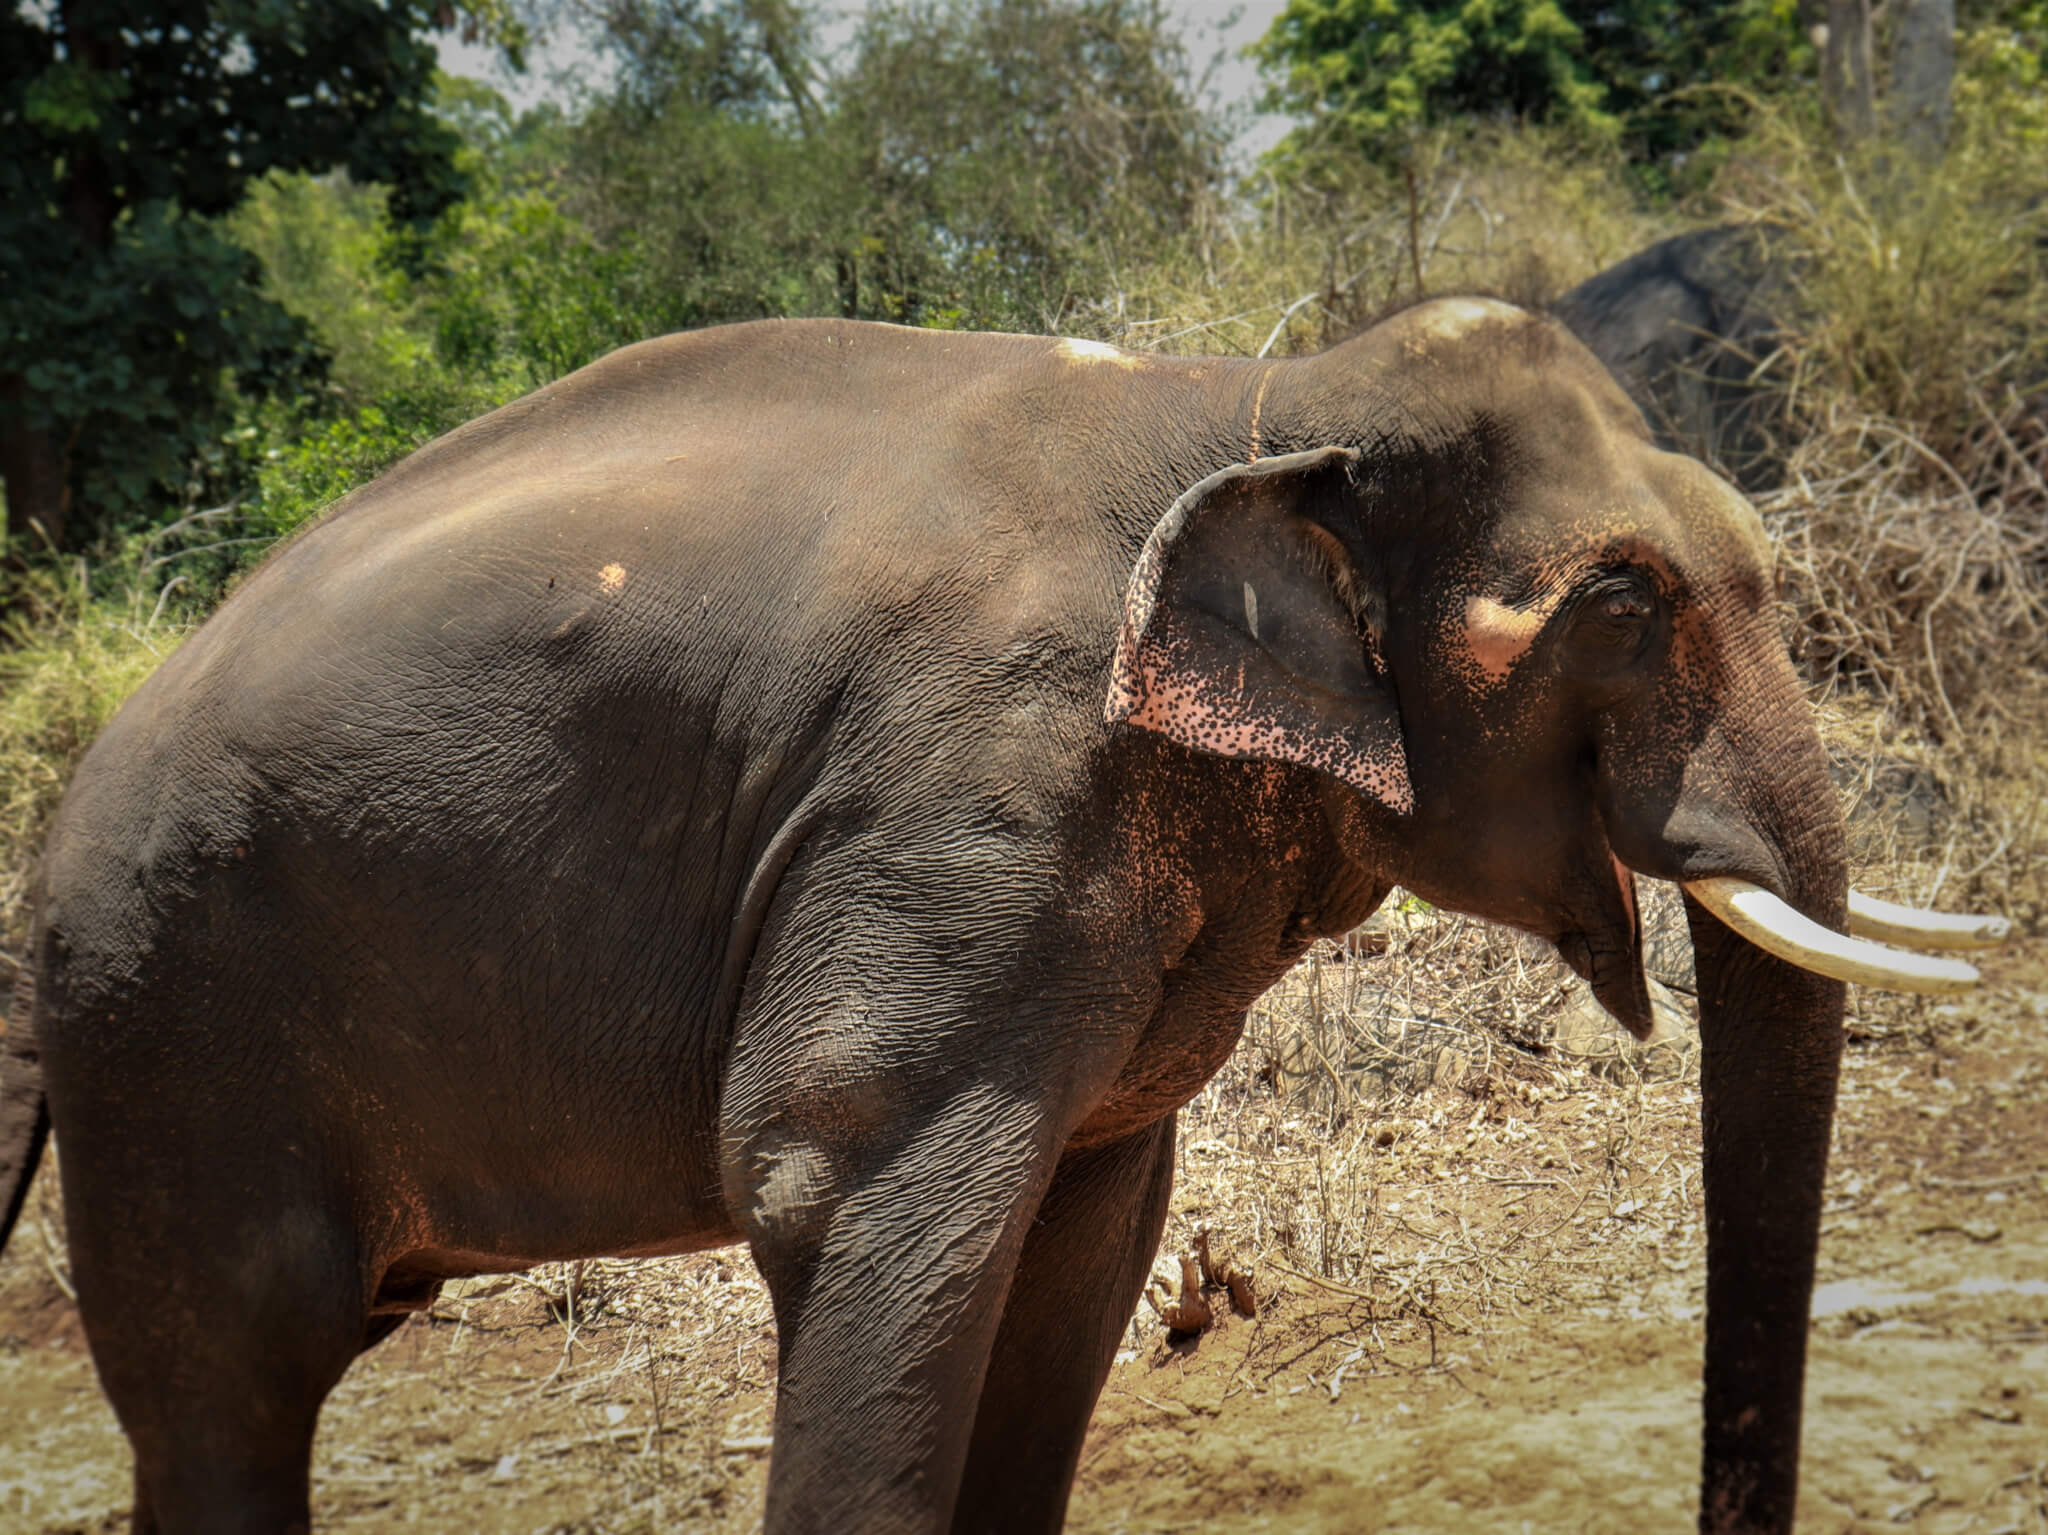 Sunder the elephant smiles at the wildlife park.